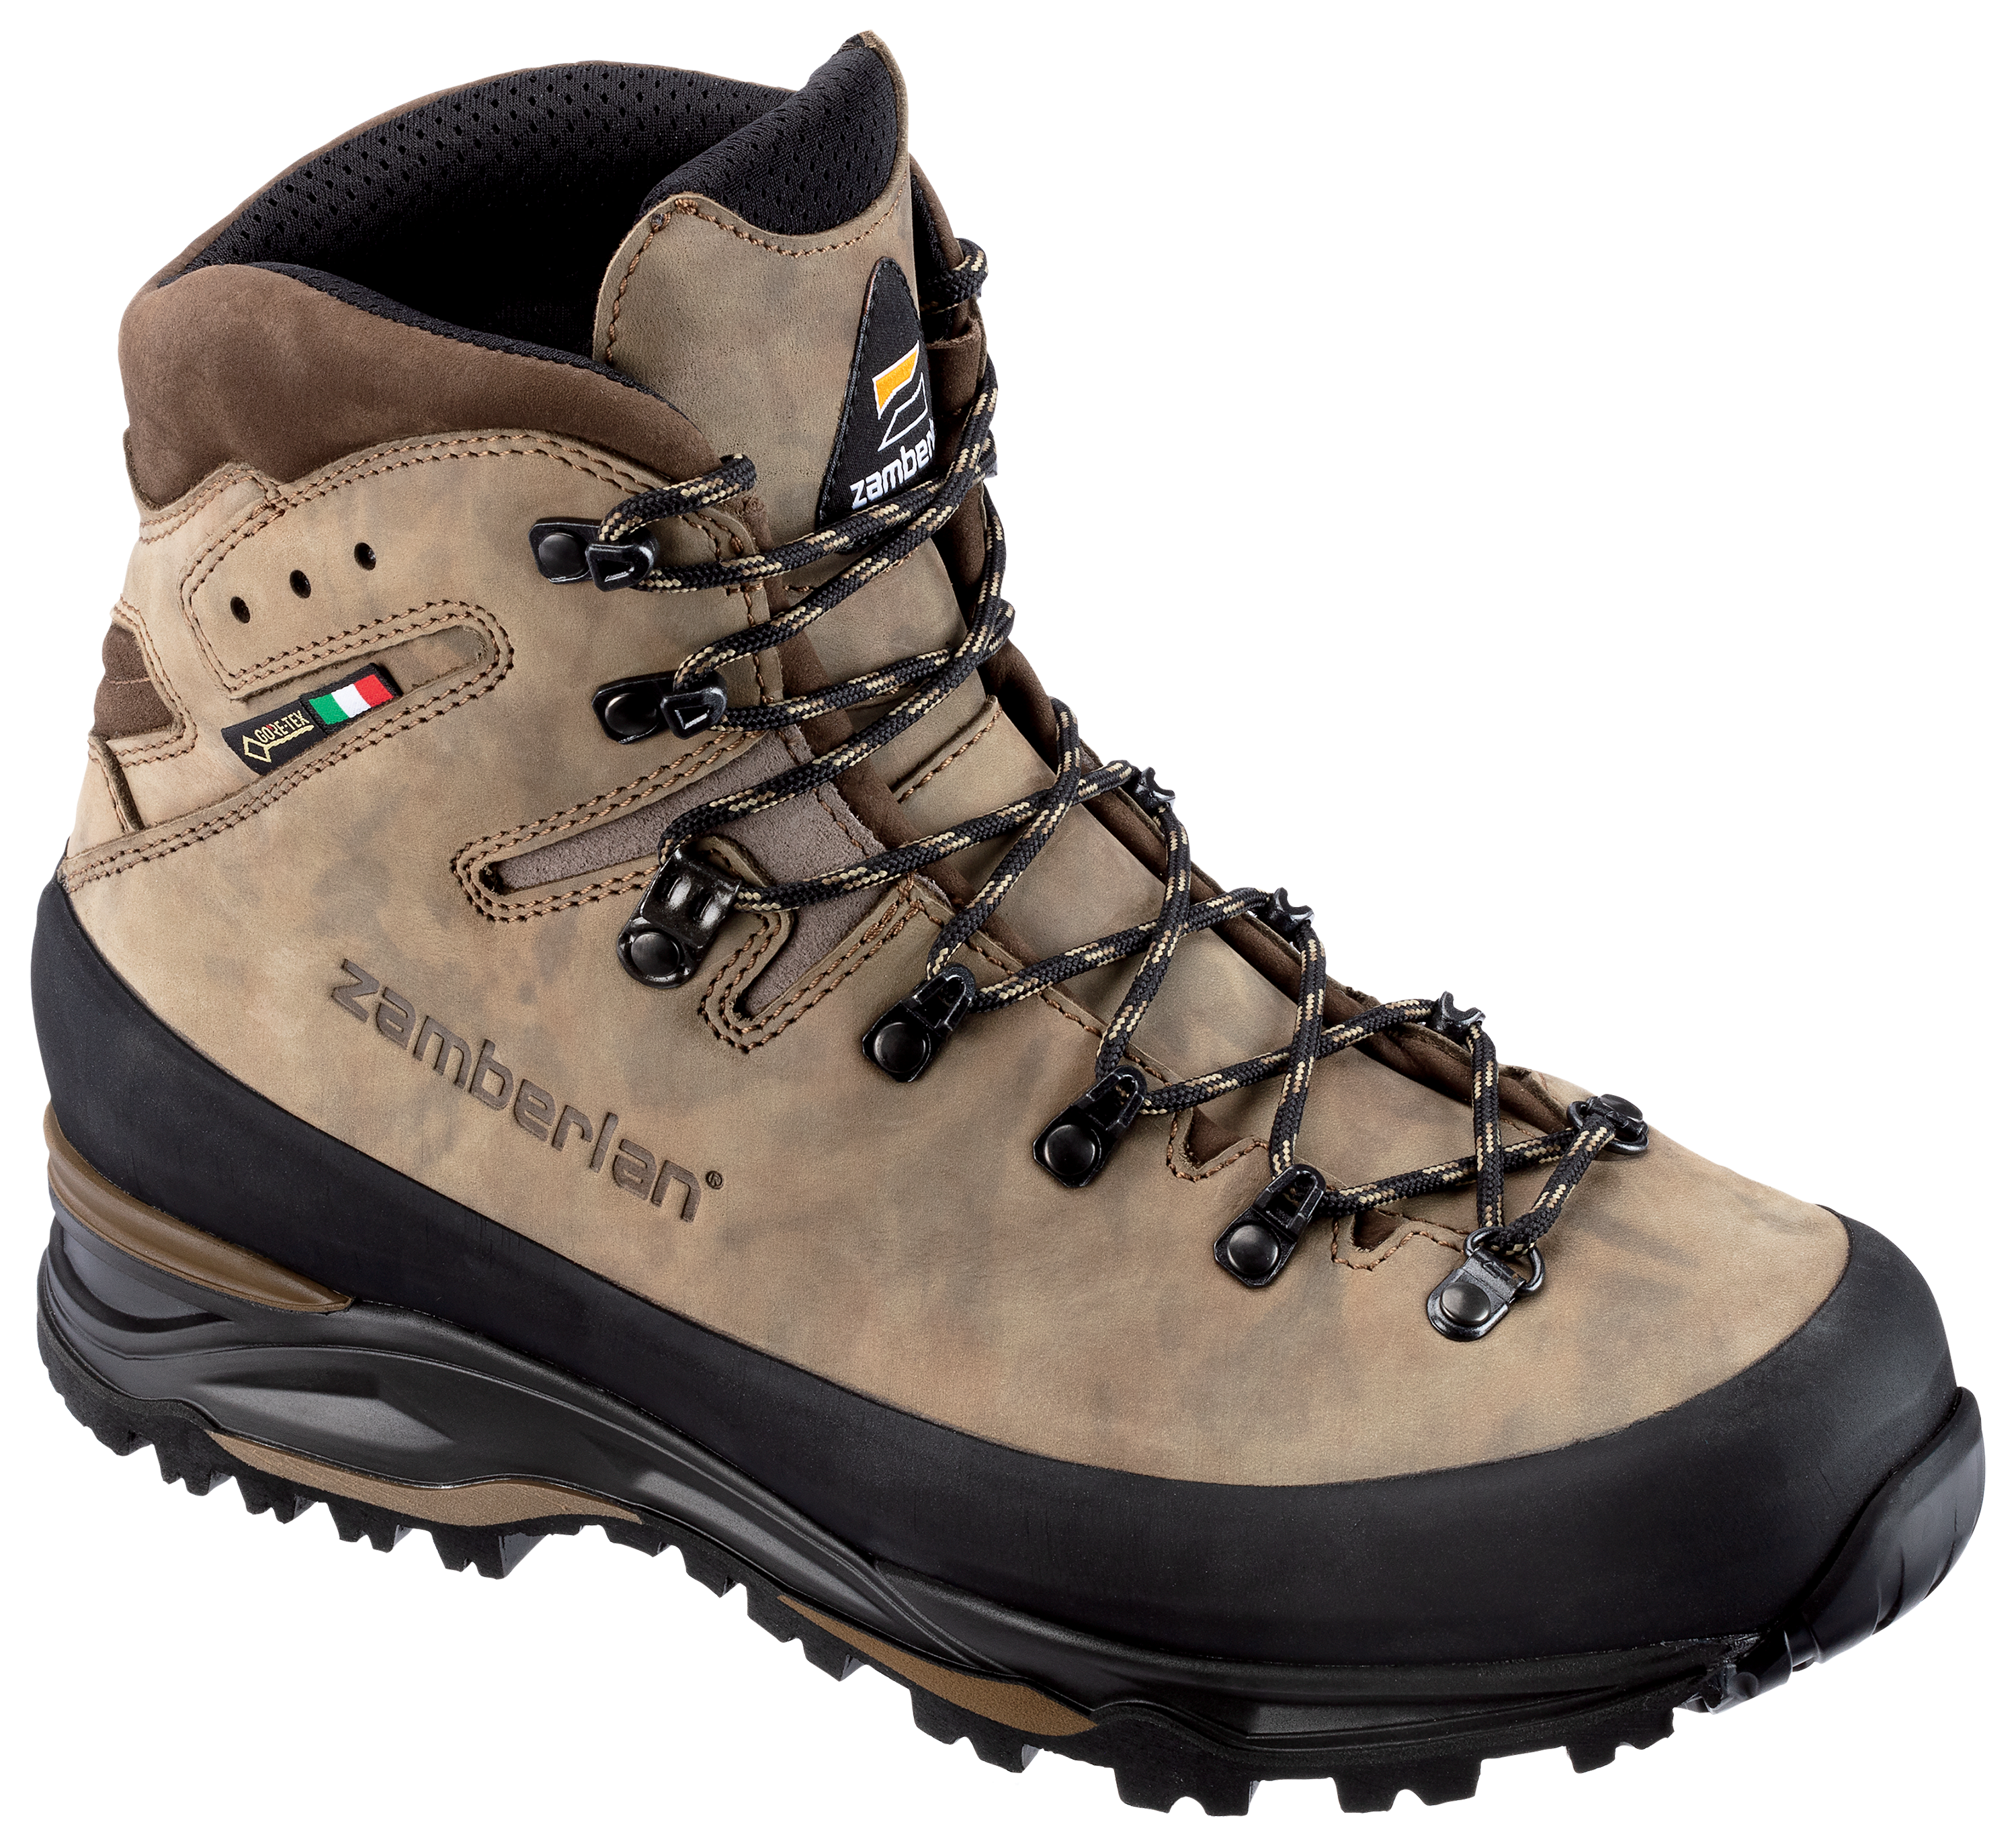 Zamberlan 960 Guide GORE-TEX RR Hunting Boots for Men - Brown Camo - 11.5W